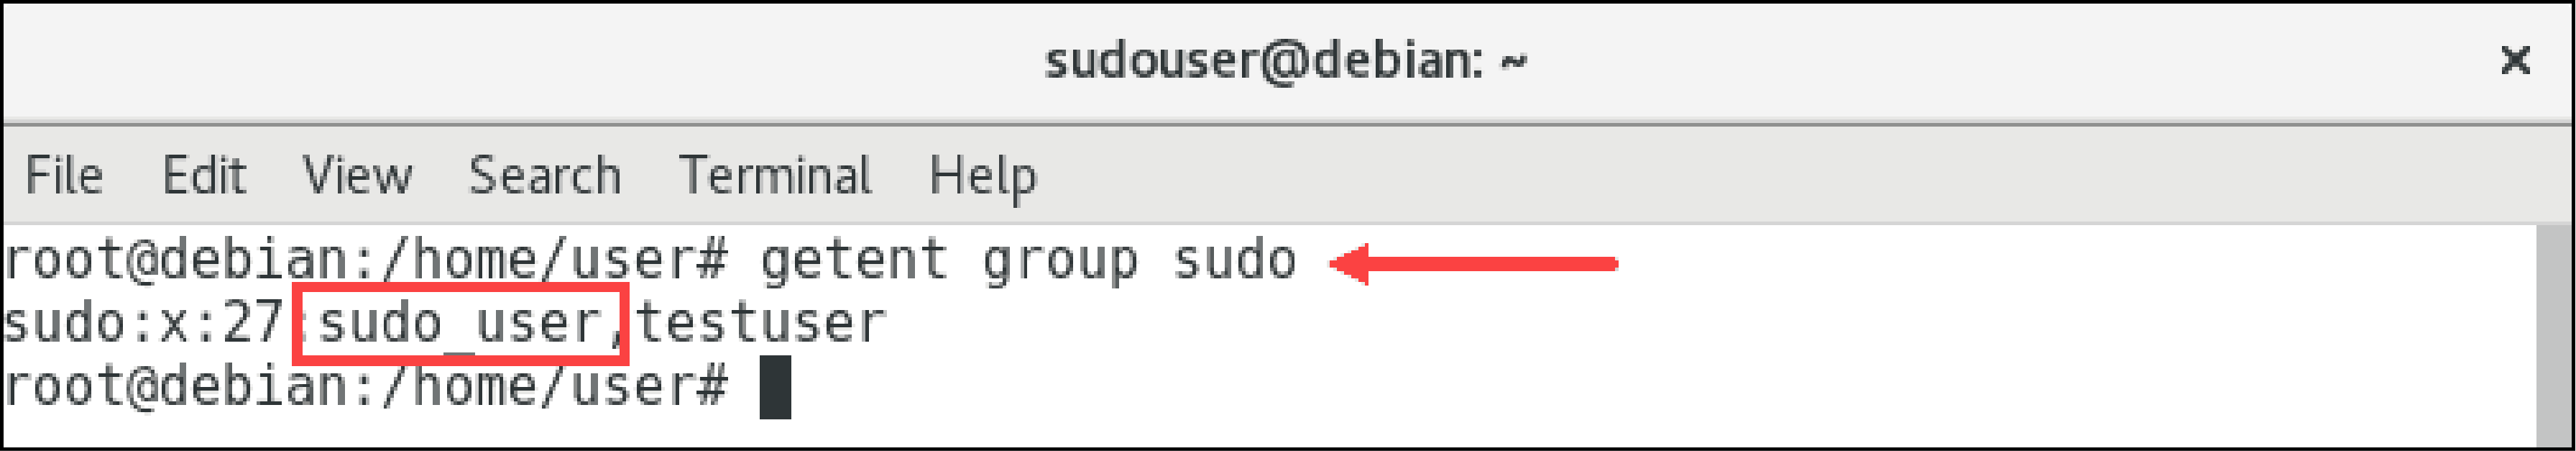 How to Add User to Sudoers in Debian